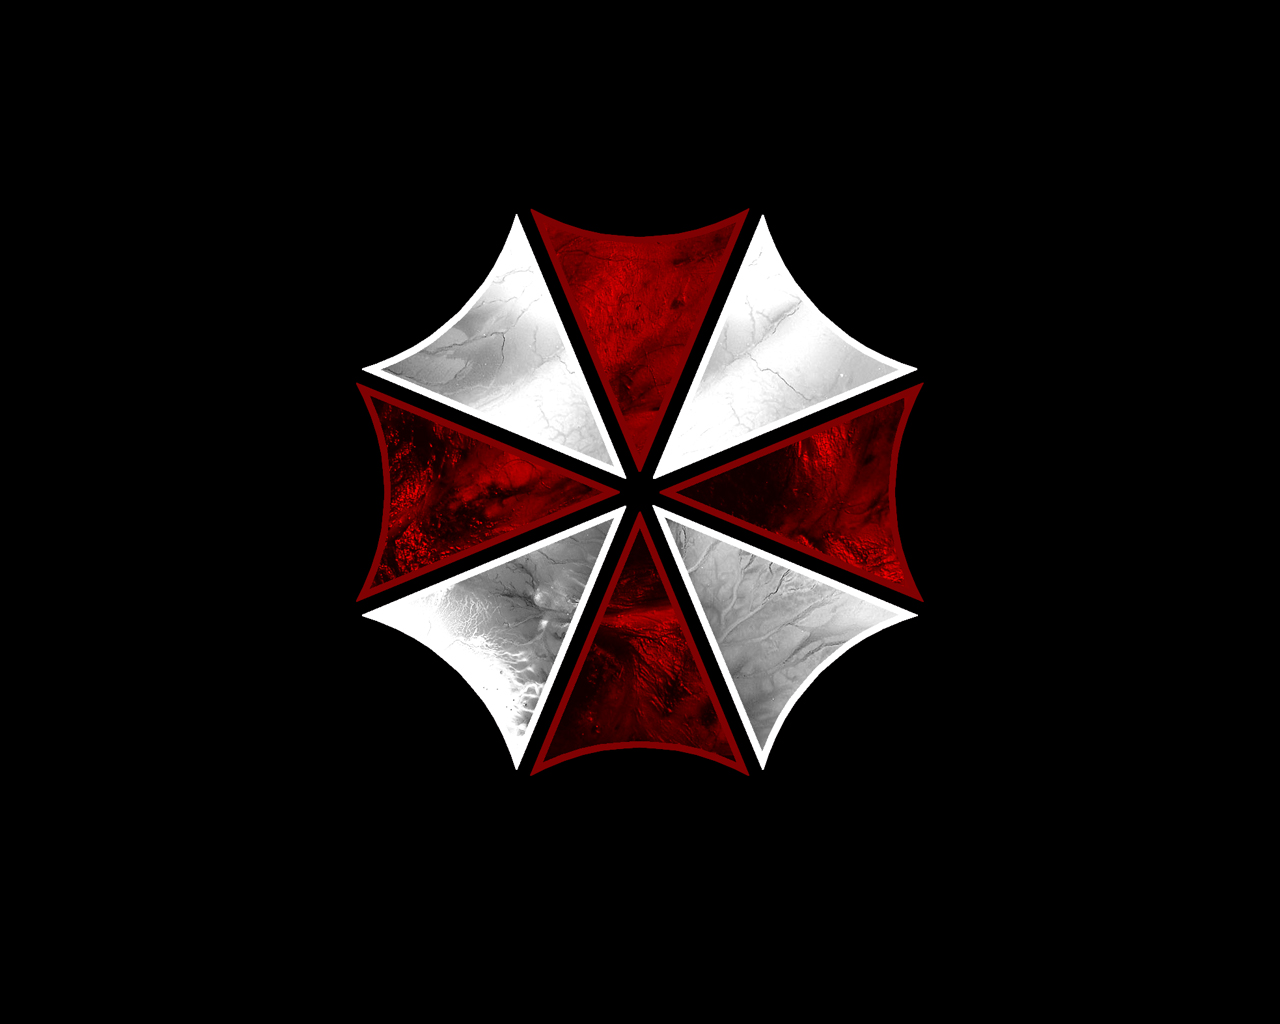 Umbrella Corporation 2 by refrico on DeviantArt